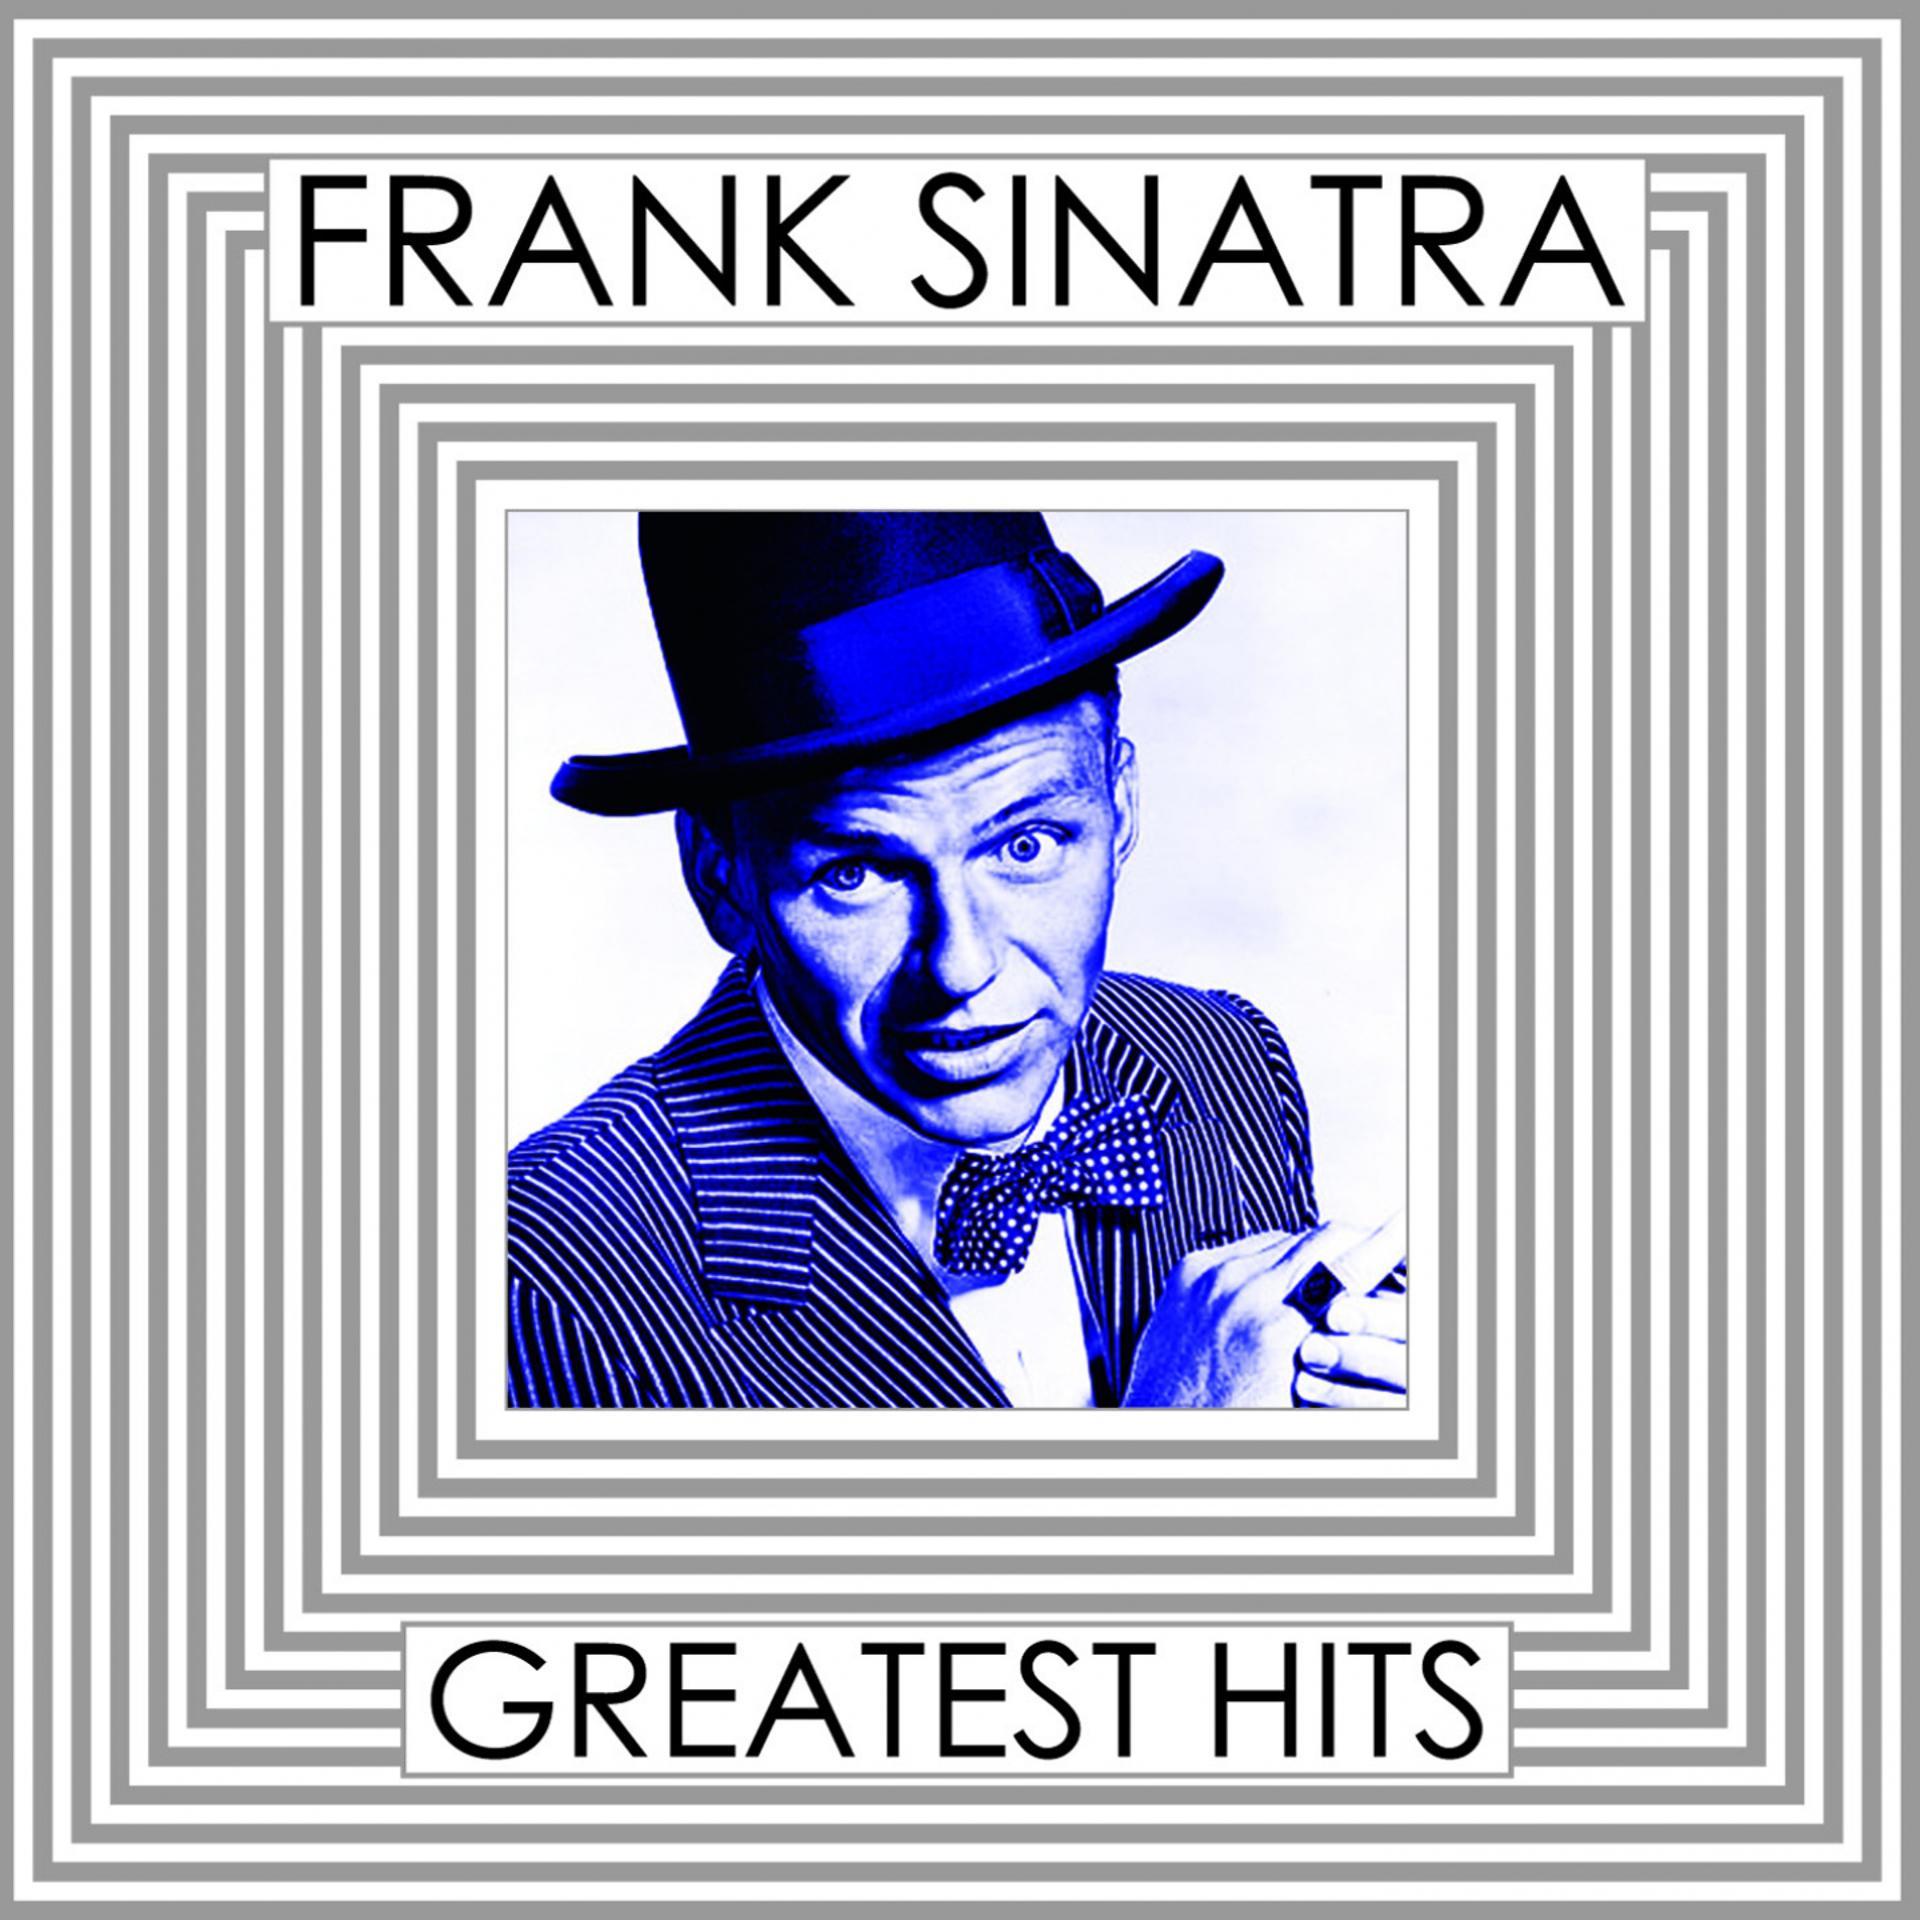 Фрэнк синатра терминатор 2. Frank Sinatra Greatest Hits. Фрэнк Синатра альбомы. Frank Sinatra Greatest Hits 2008. Фрэнк Синатра лучшие.